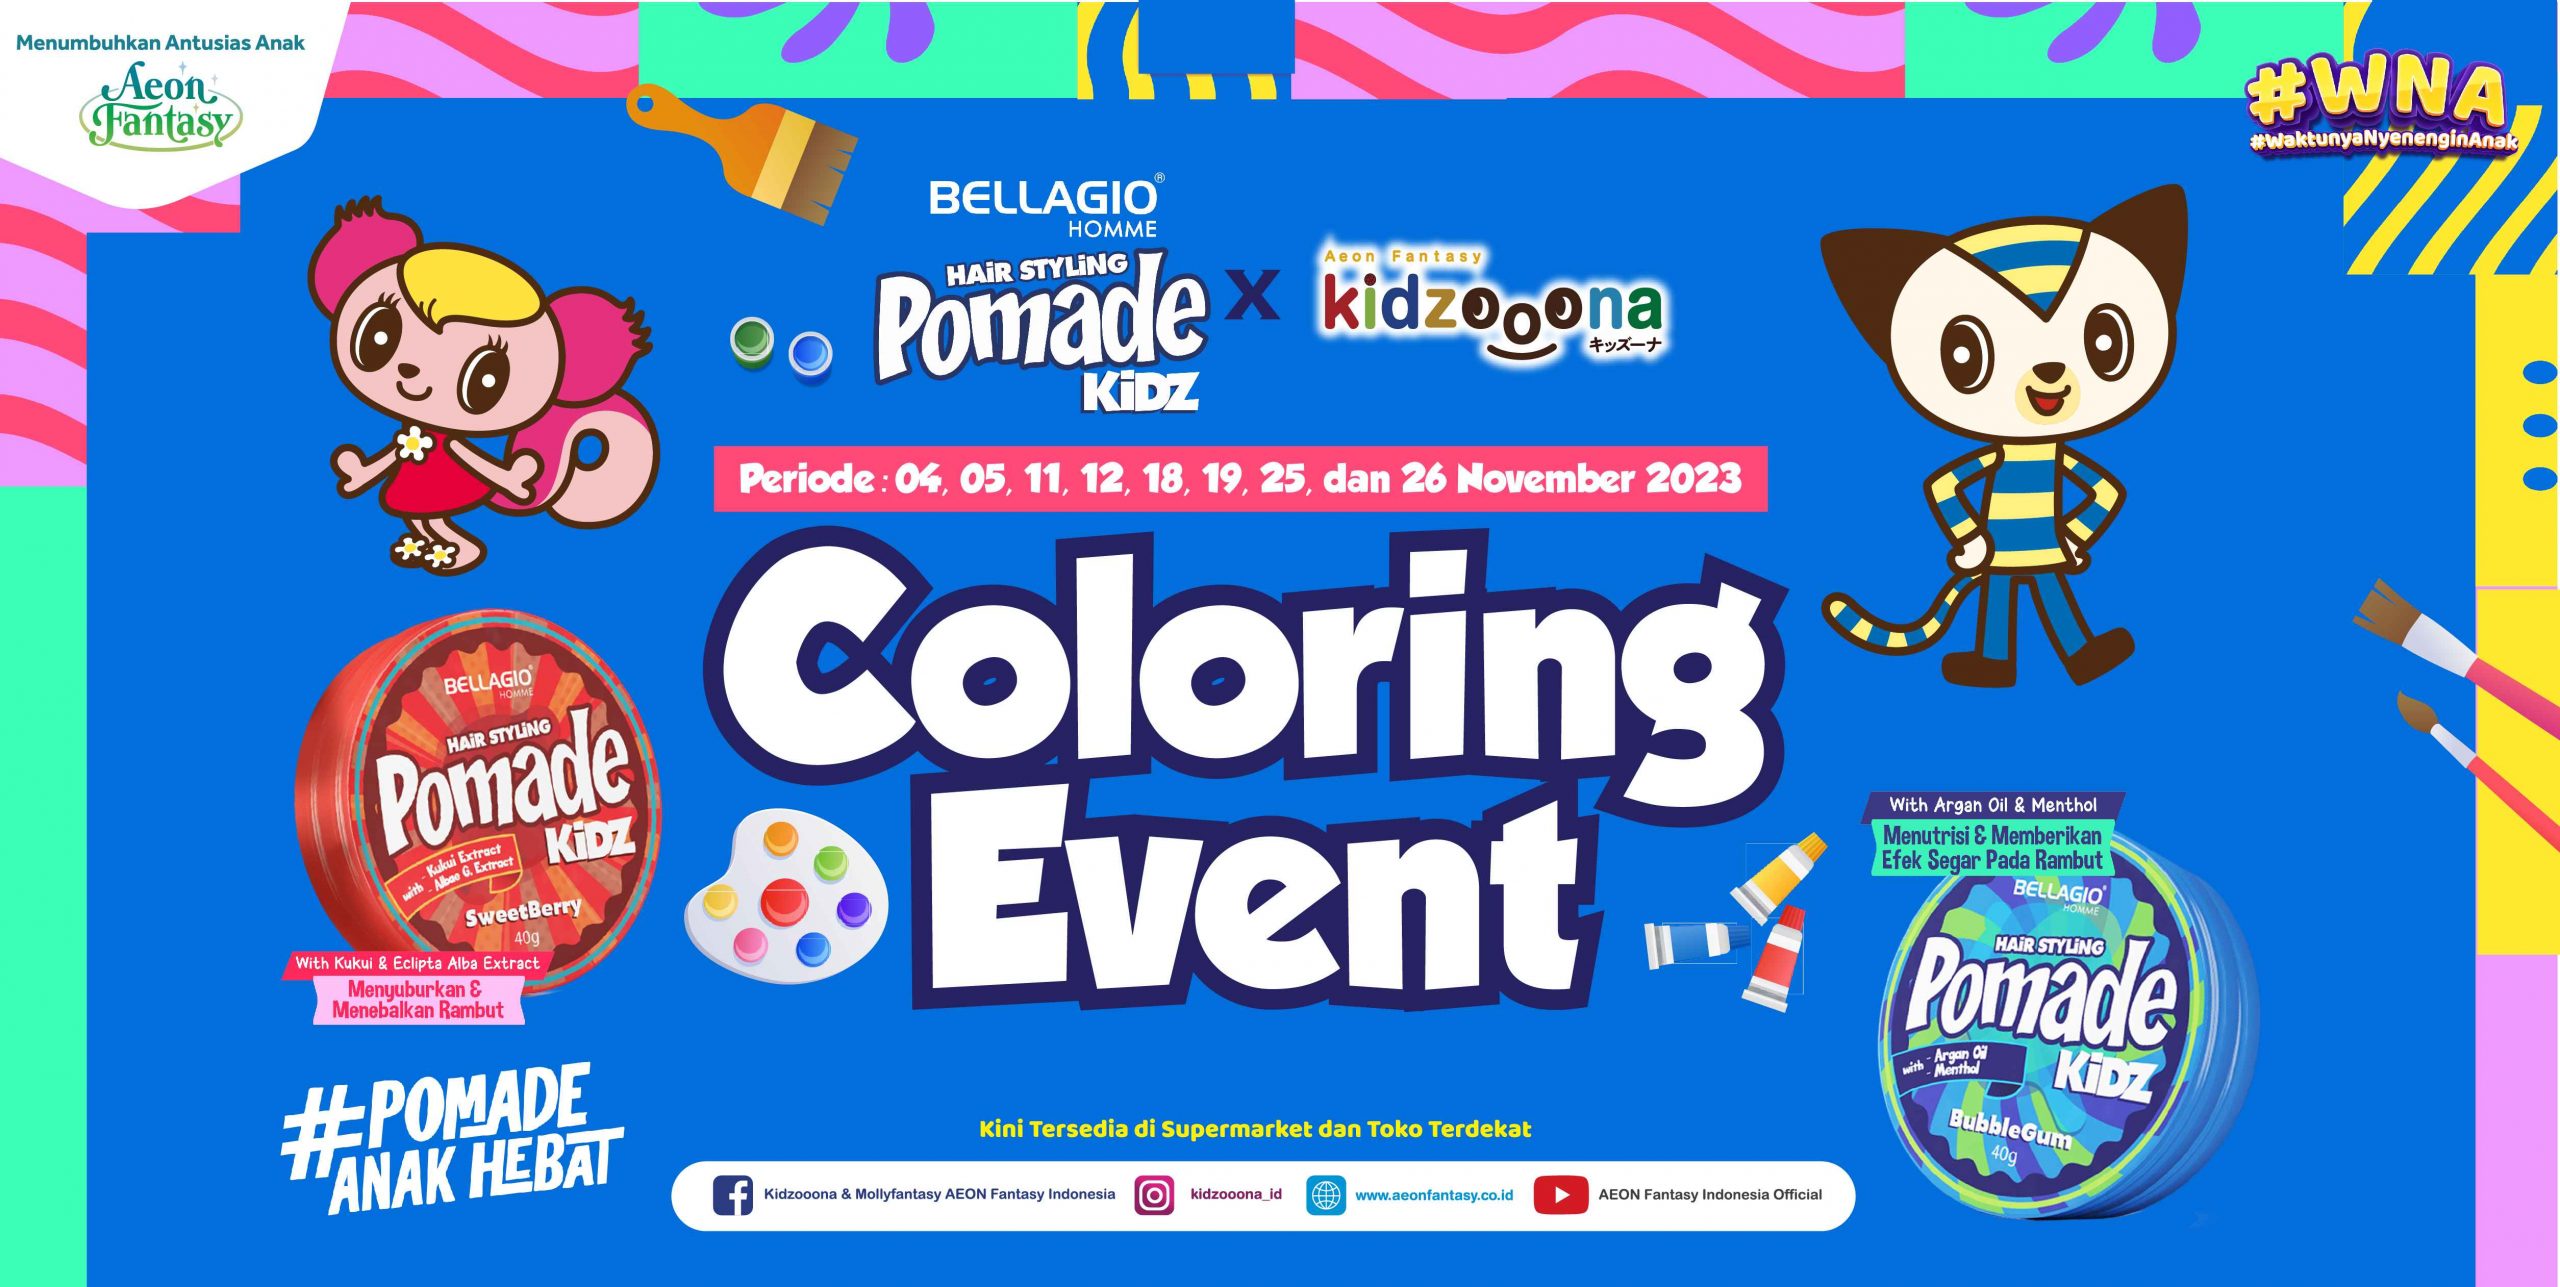 [Kidzooona] Coloring Event kidzooona X Bellagio Pomade Kidz